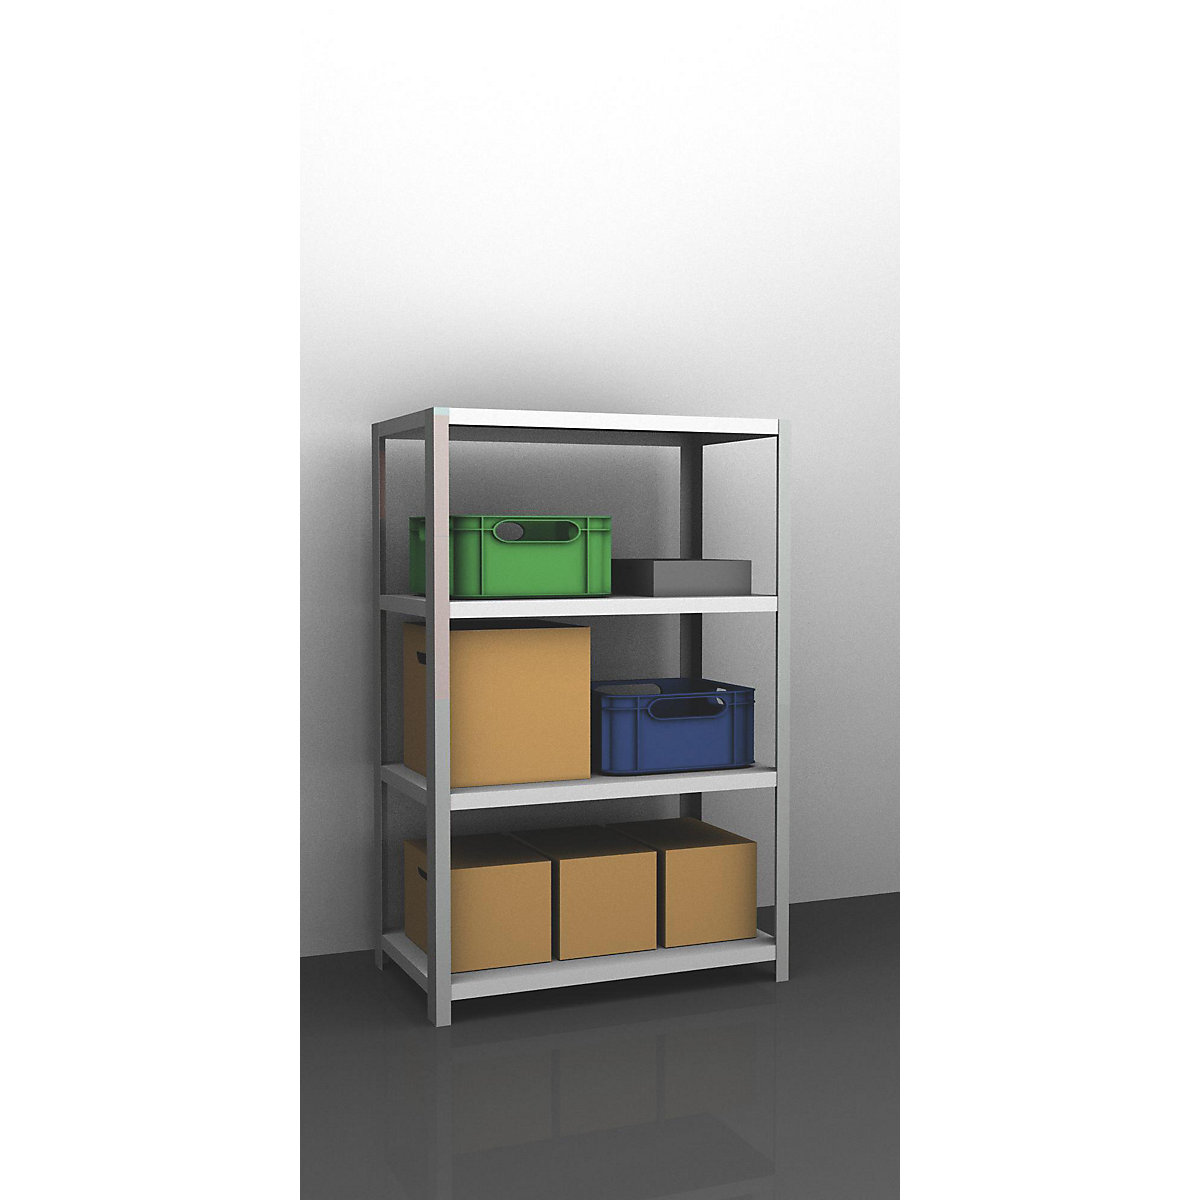 Bolt-together shelf unit, light duty, plastic coated – eurokraft pro, shelf unit height 1500 mm, shelf width 1000 mm, depth 600 mm, standard shelf unit-4